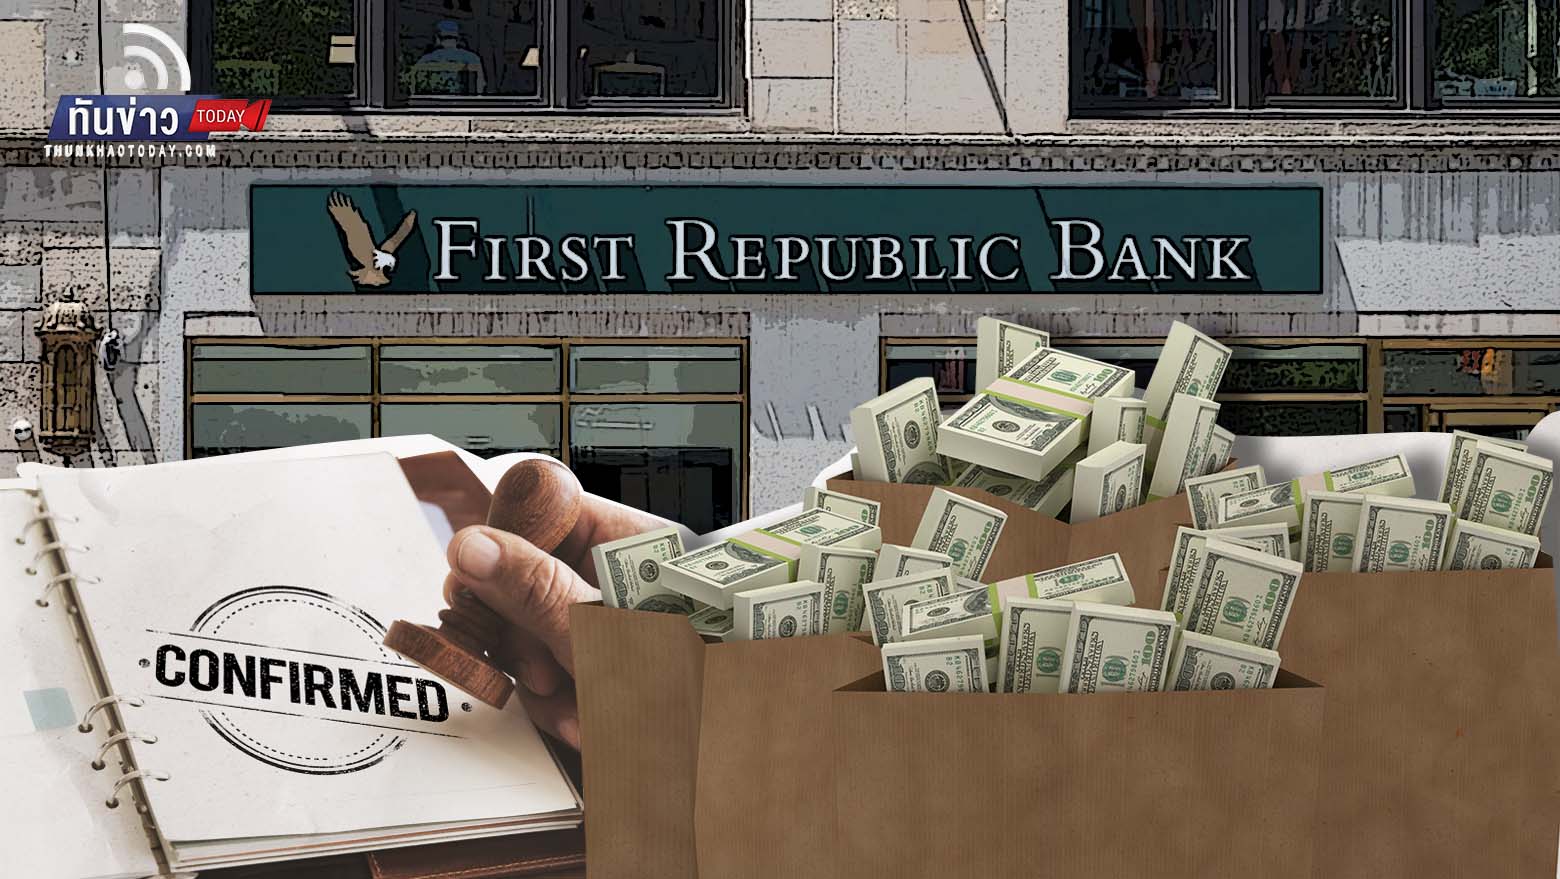 First Republic Bank ส่อล้มเป็นรายที่4 - คลังยันระบบสถาบันการเงินไทยแข็งแกร่ง